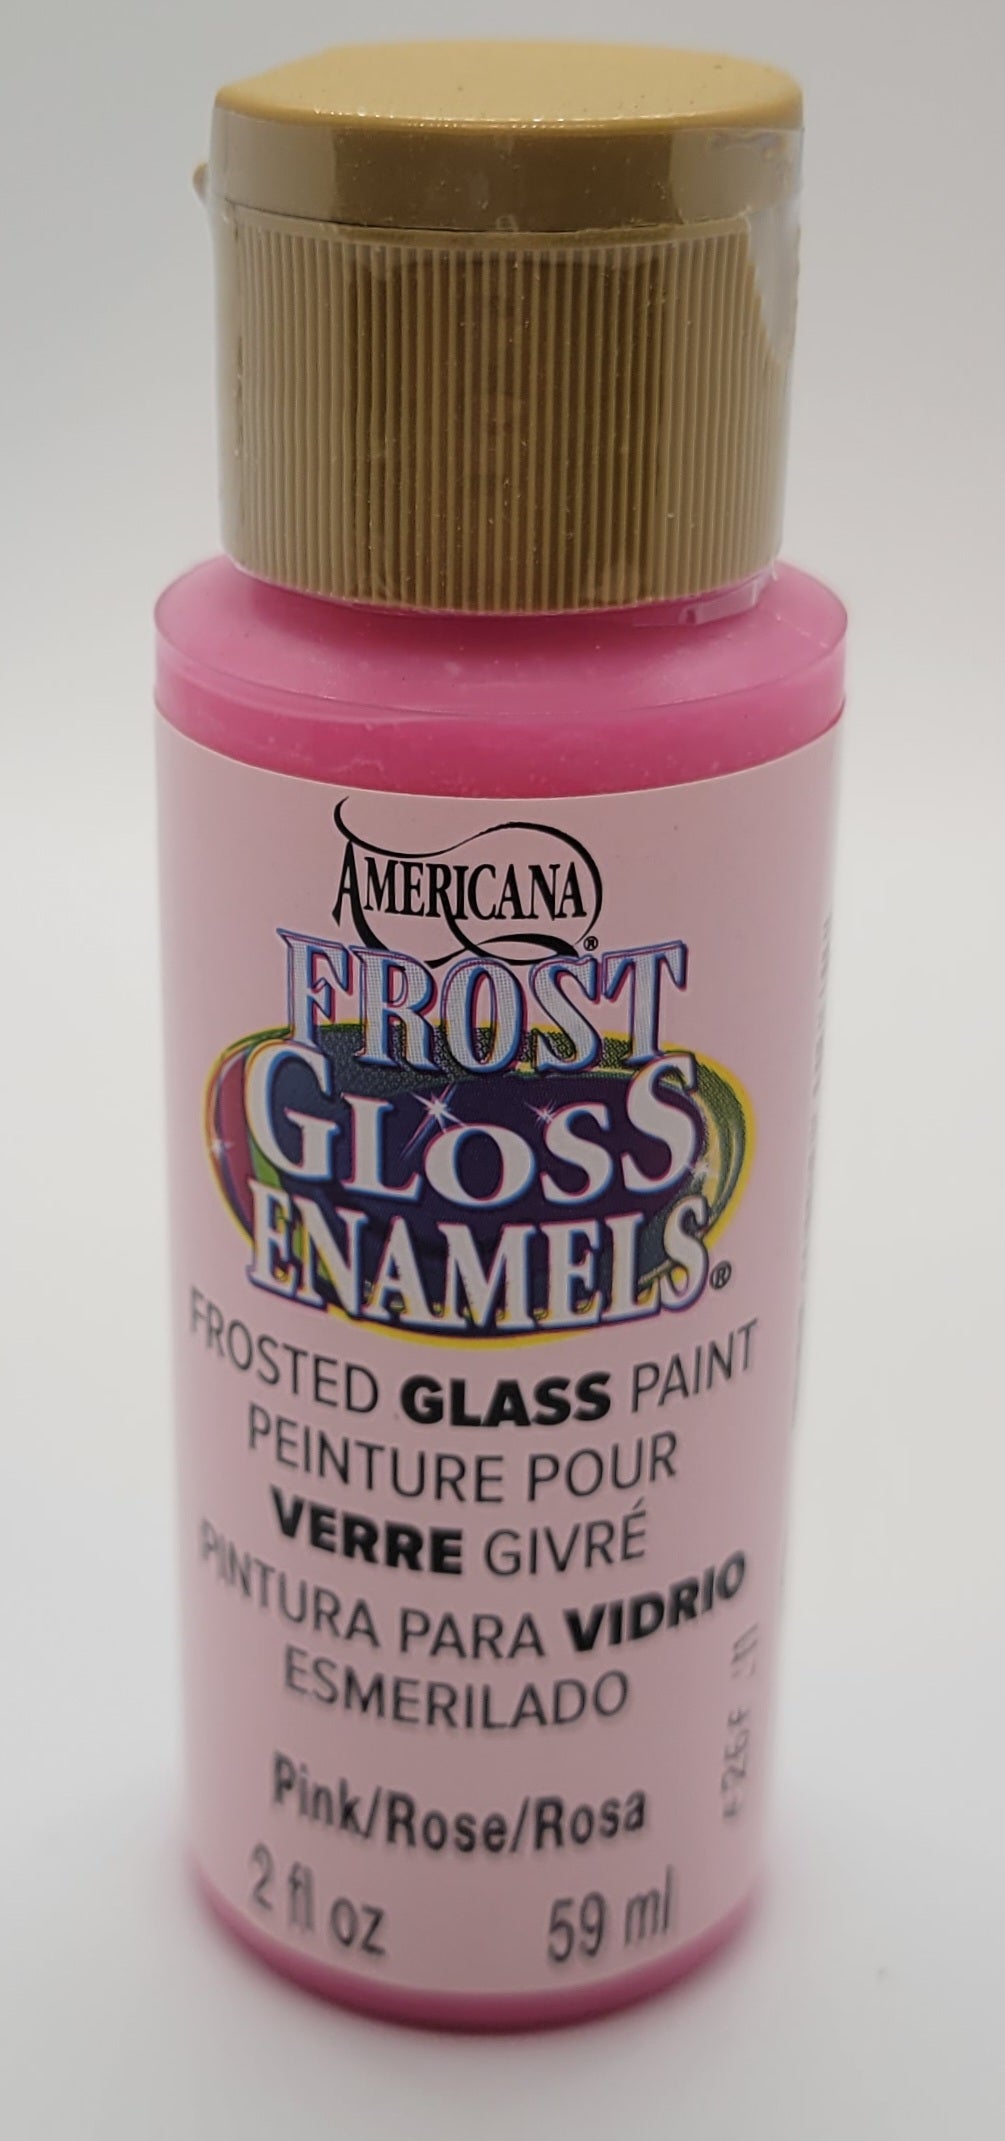 Americana Gloss Enamels Acrylic Paint 2oz White